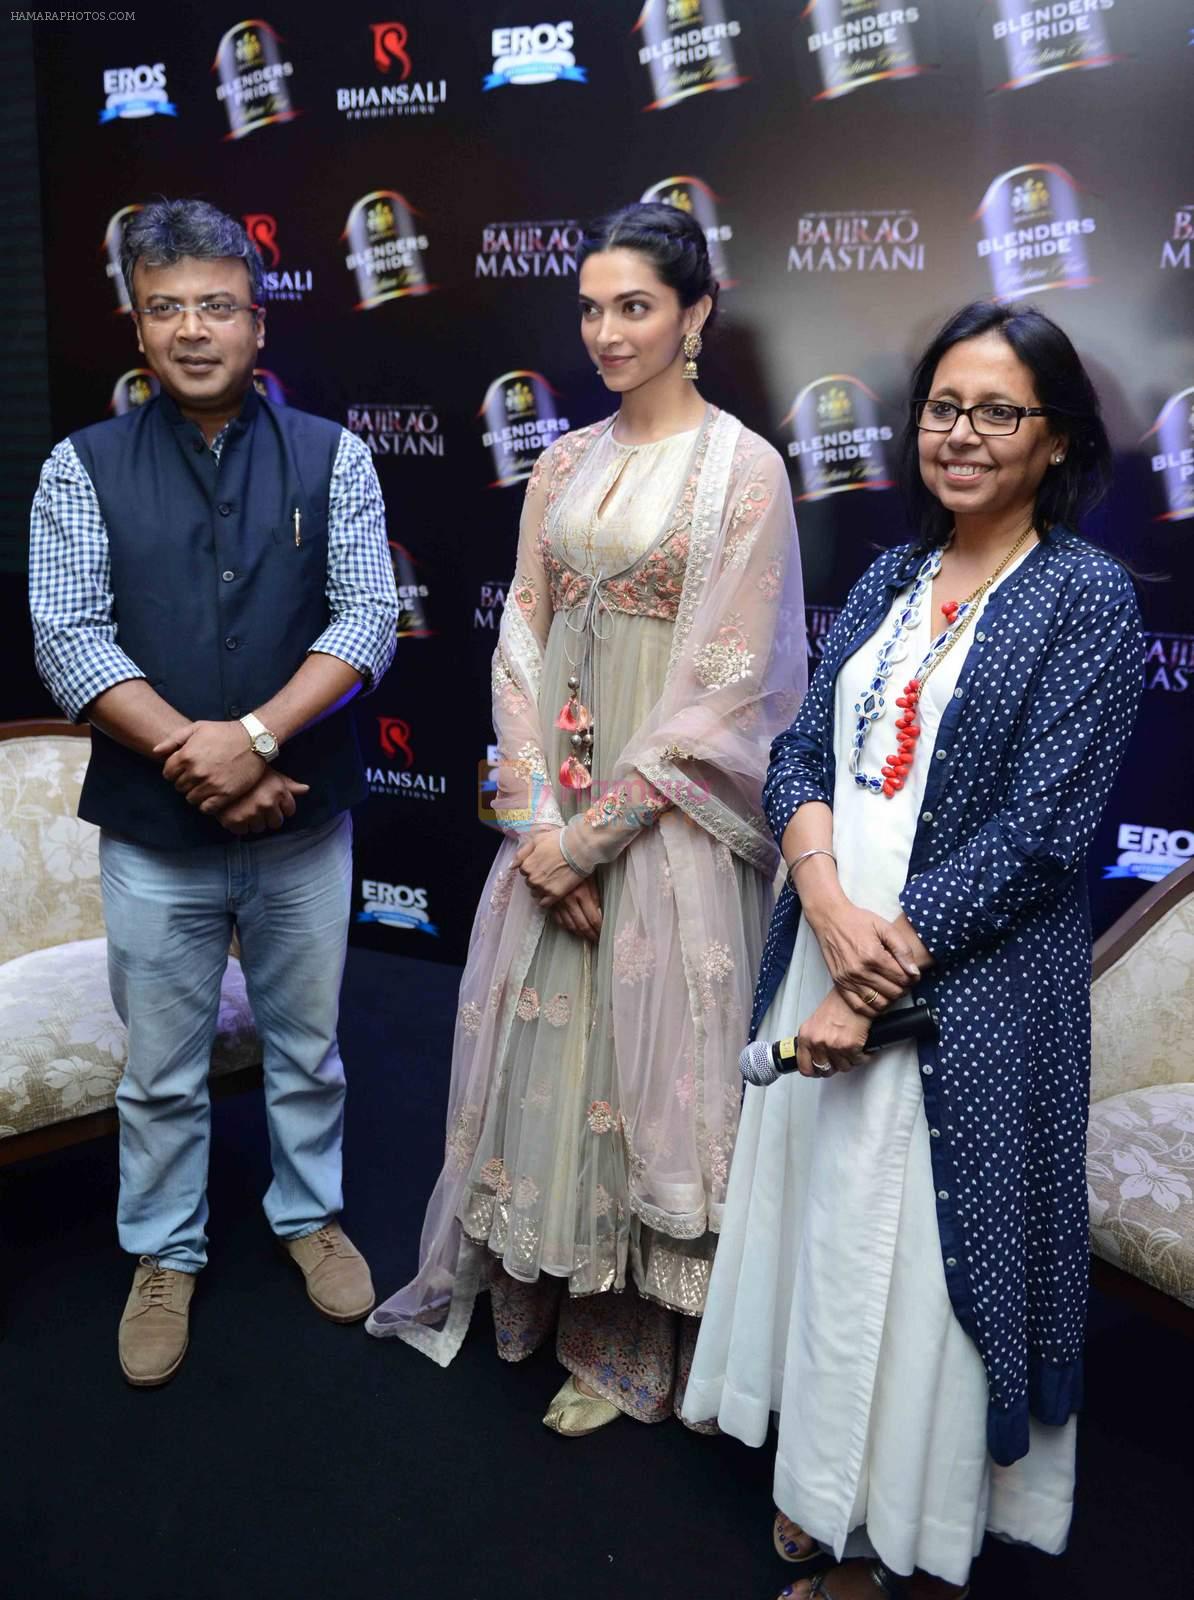 Deepika Padukone at Anju Modi's Bajirao Mastani collection launch on 17th Oct 2015